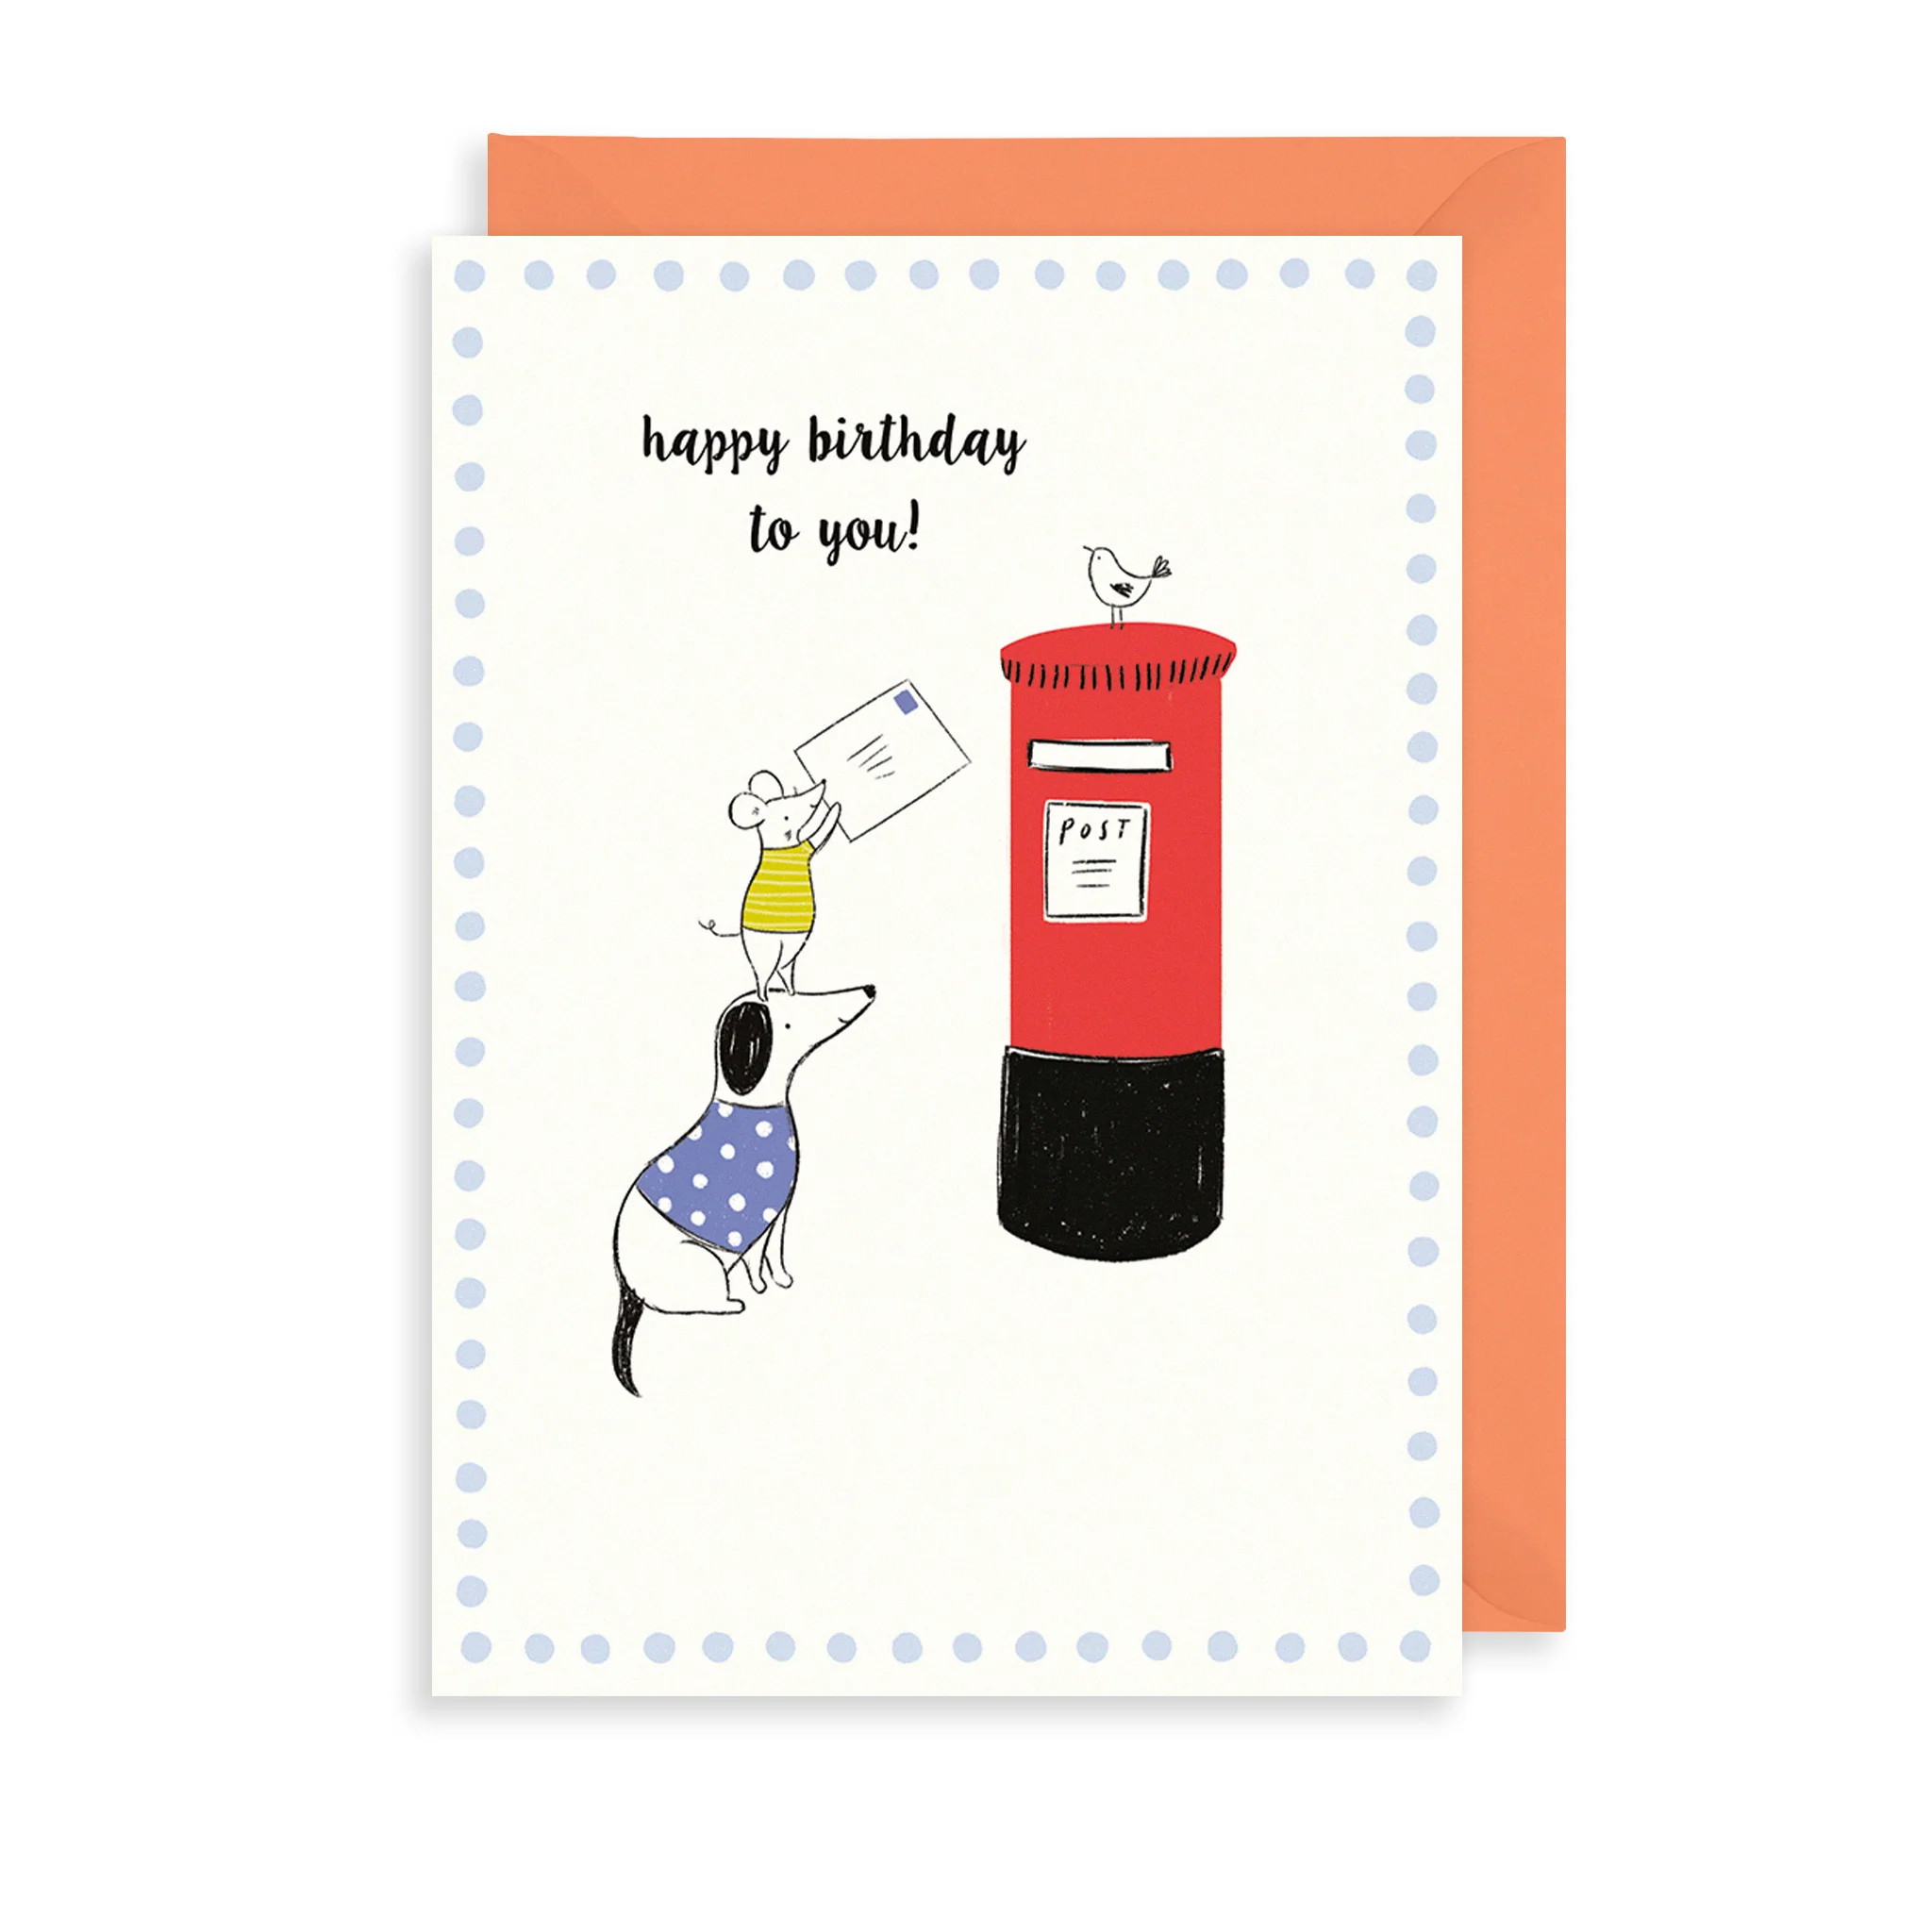 Call Me Frank Postbox Birthday Greetings Card